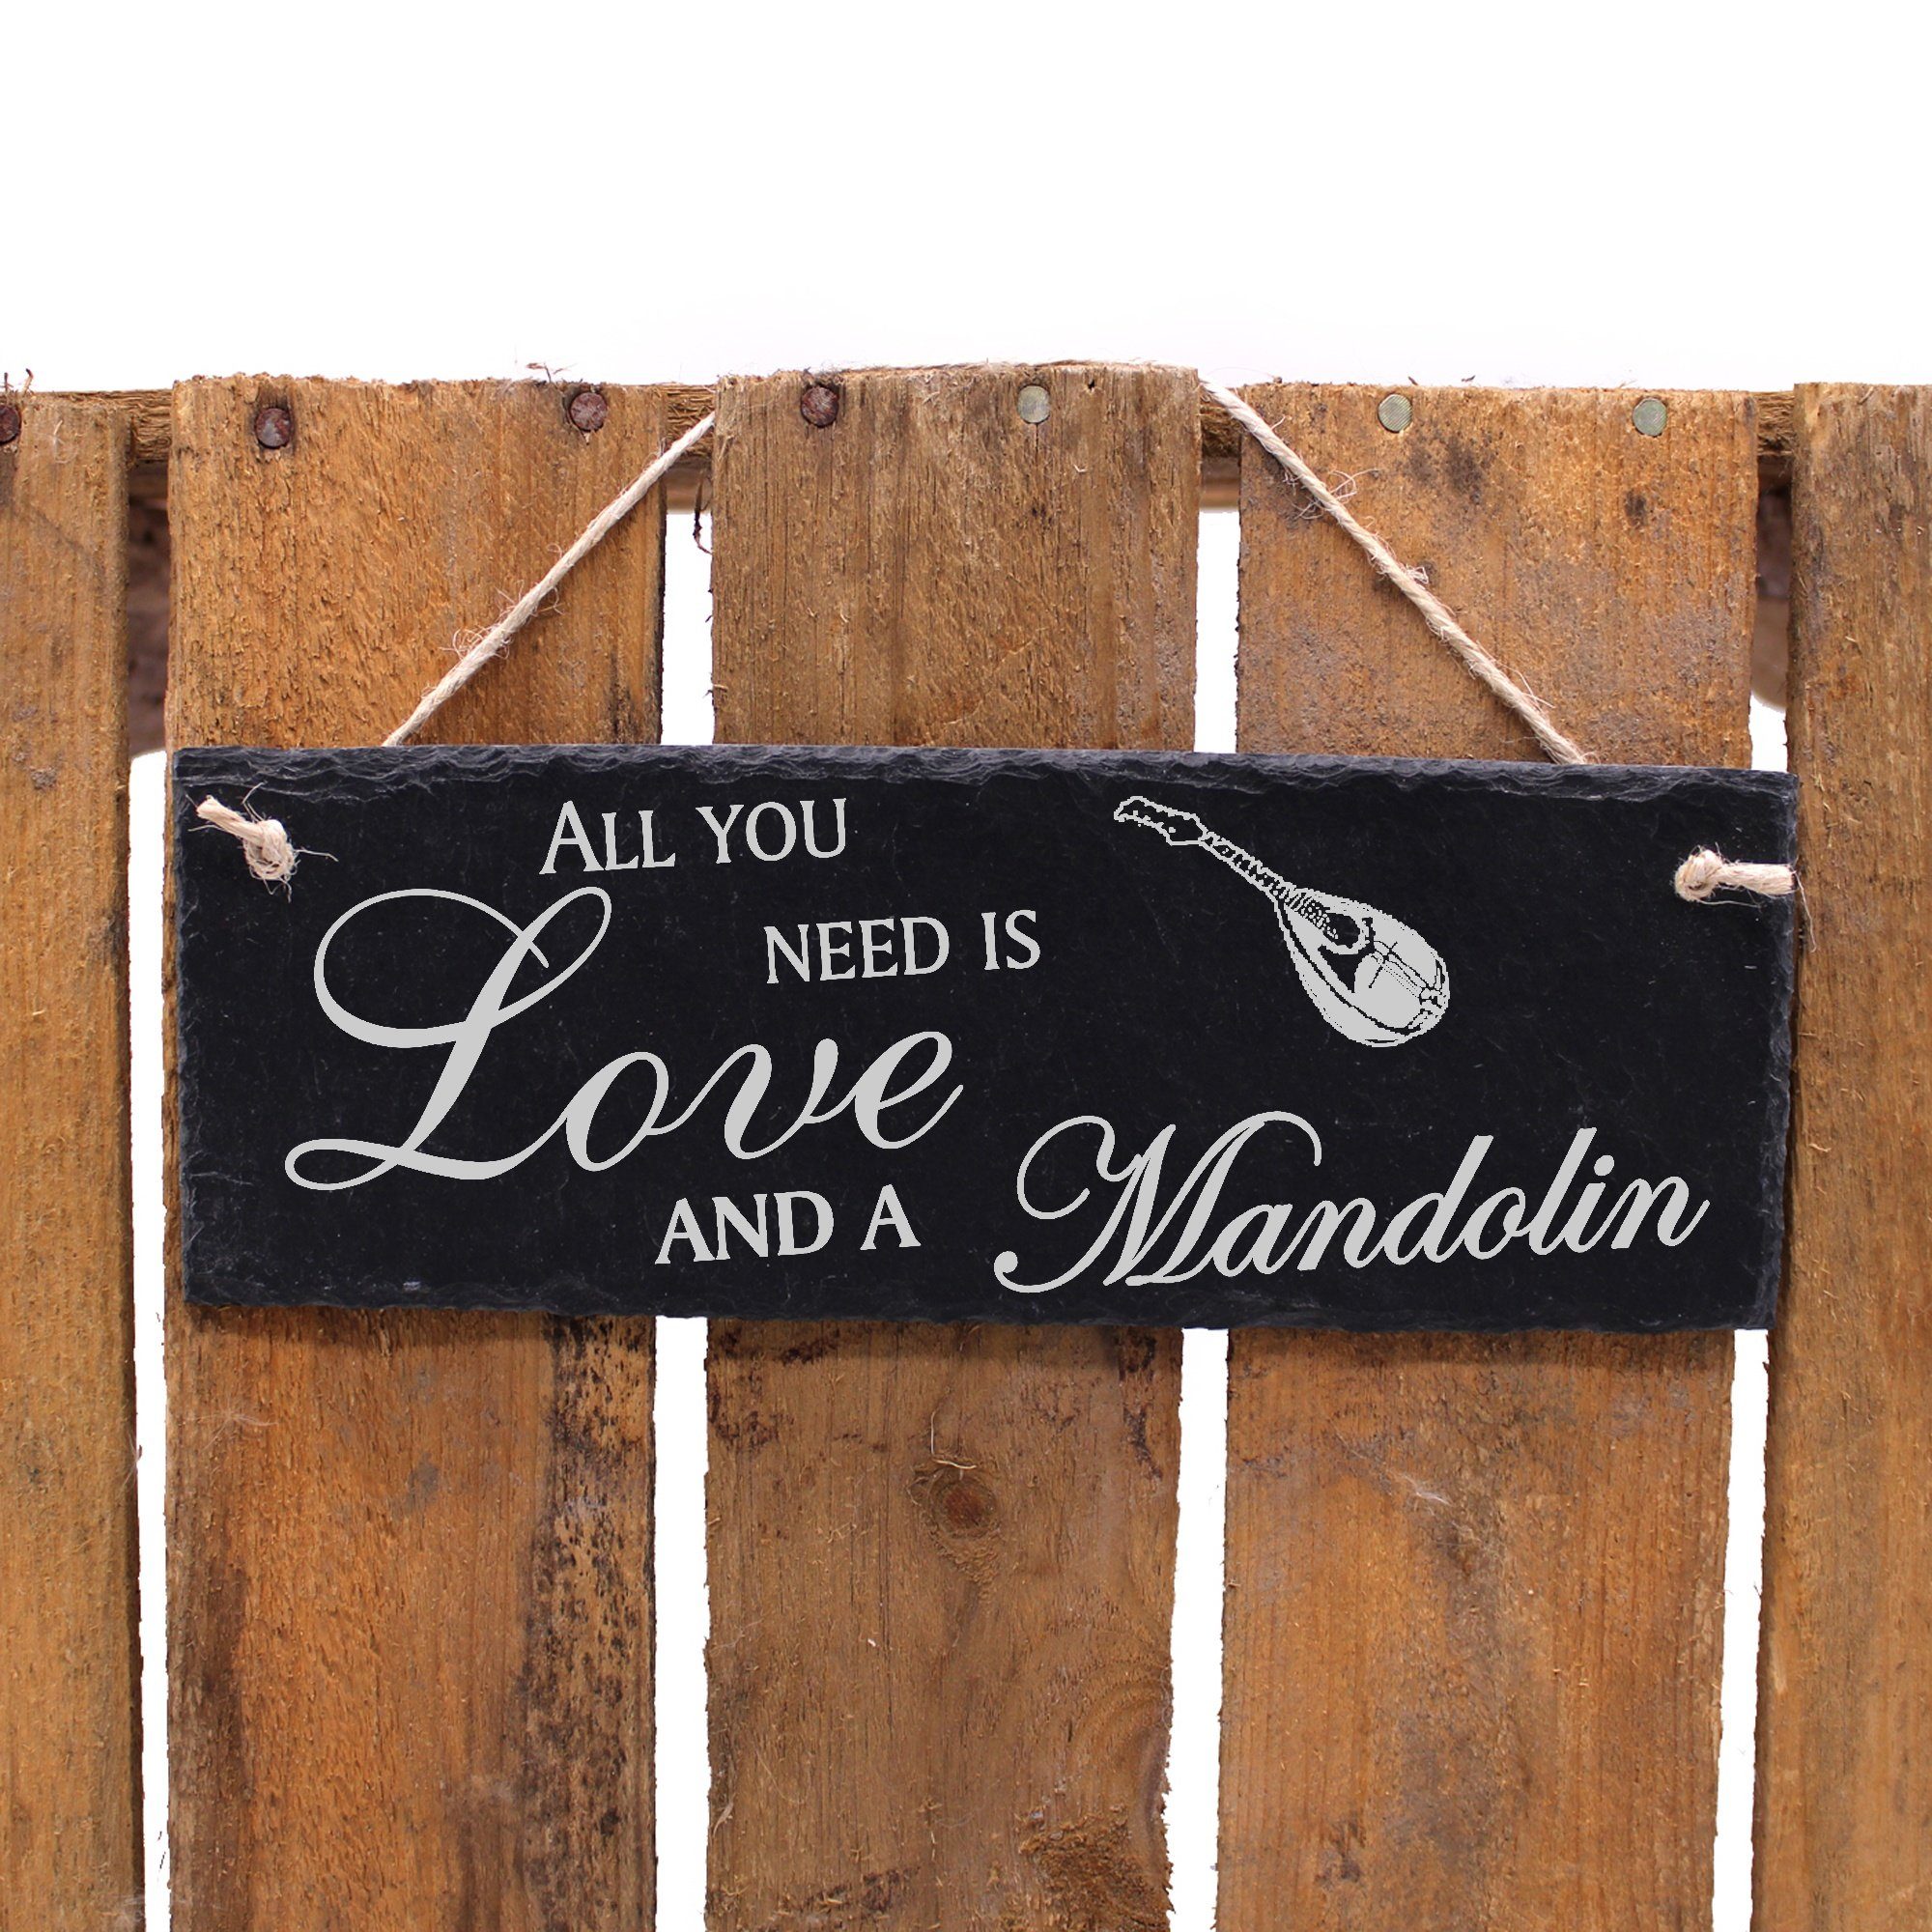 Love Hängedekoration and 22x8cm is Mandolin Mandoline a you All Dekolando need